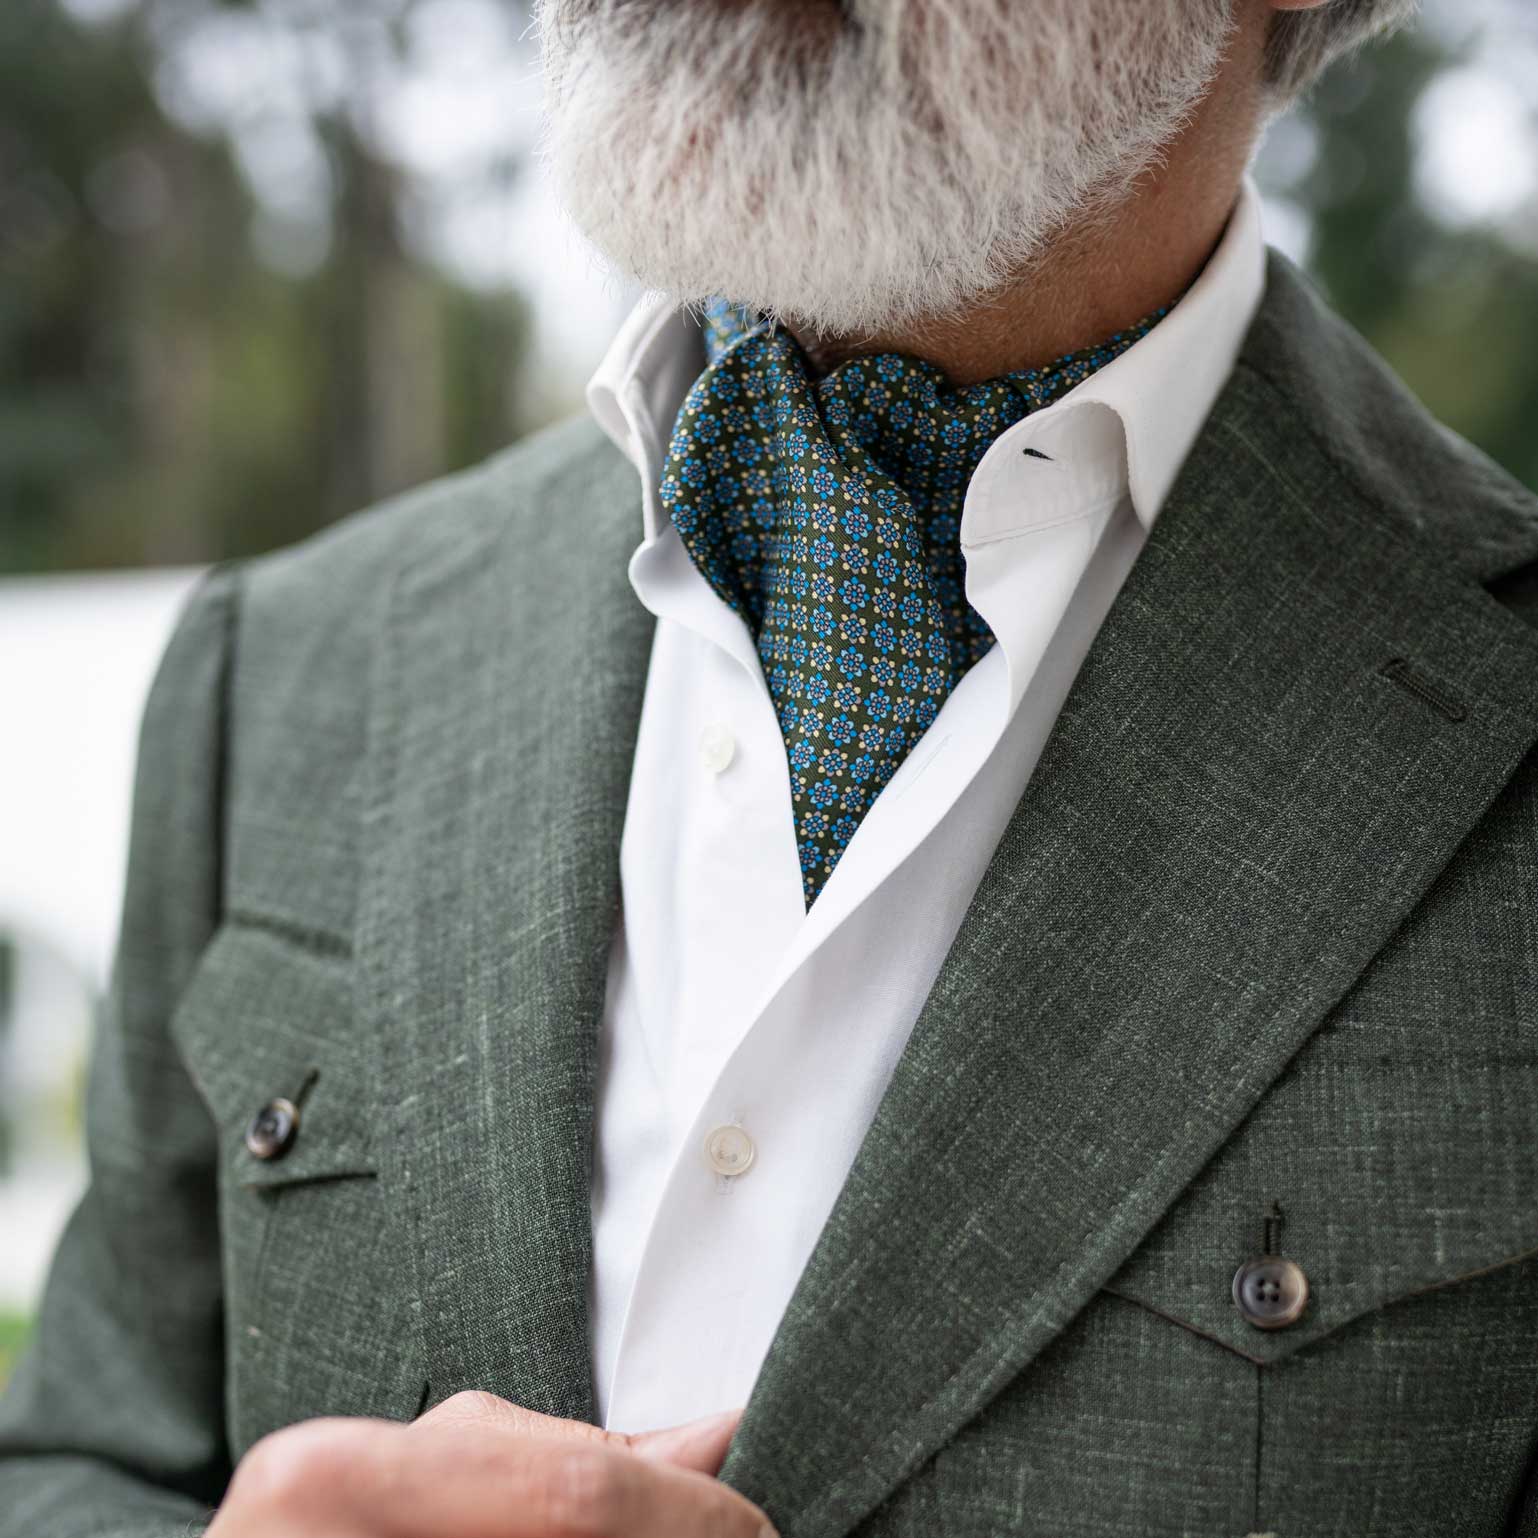 5391S cravatta uomo MESSAGERIE seta verde silk green tie men